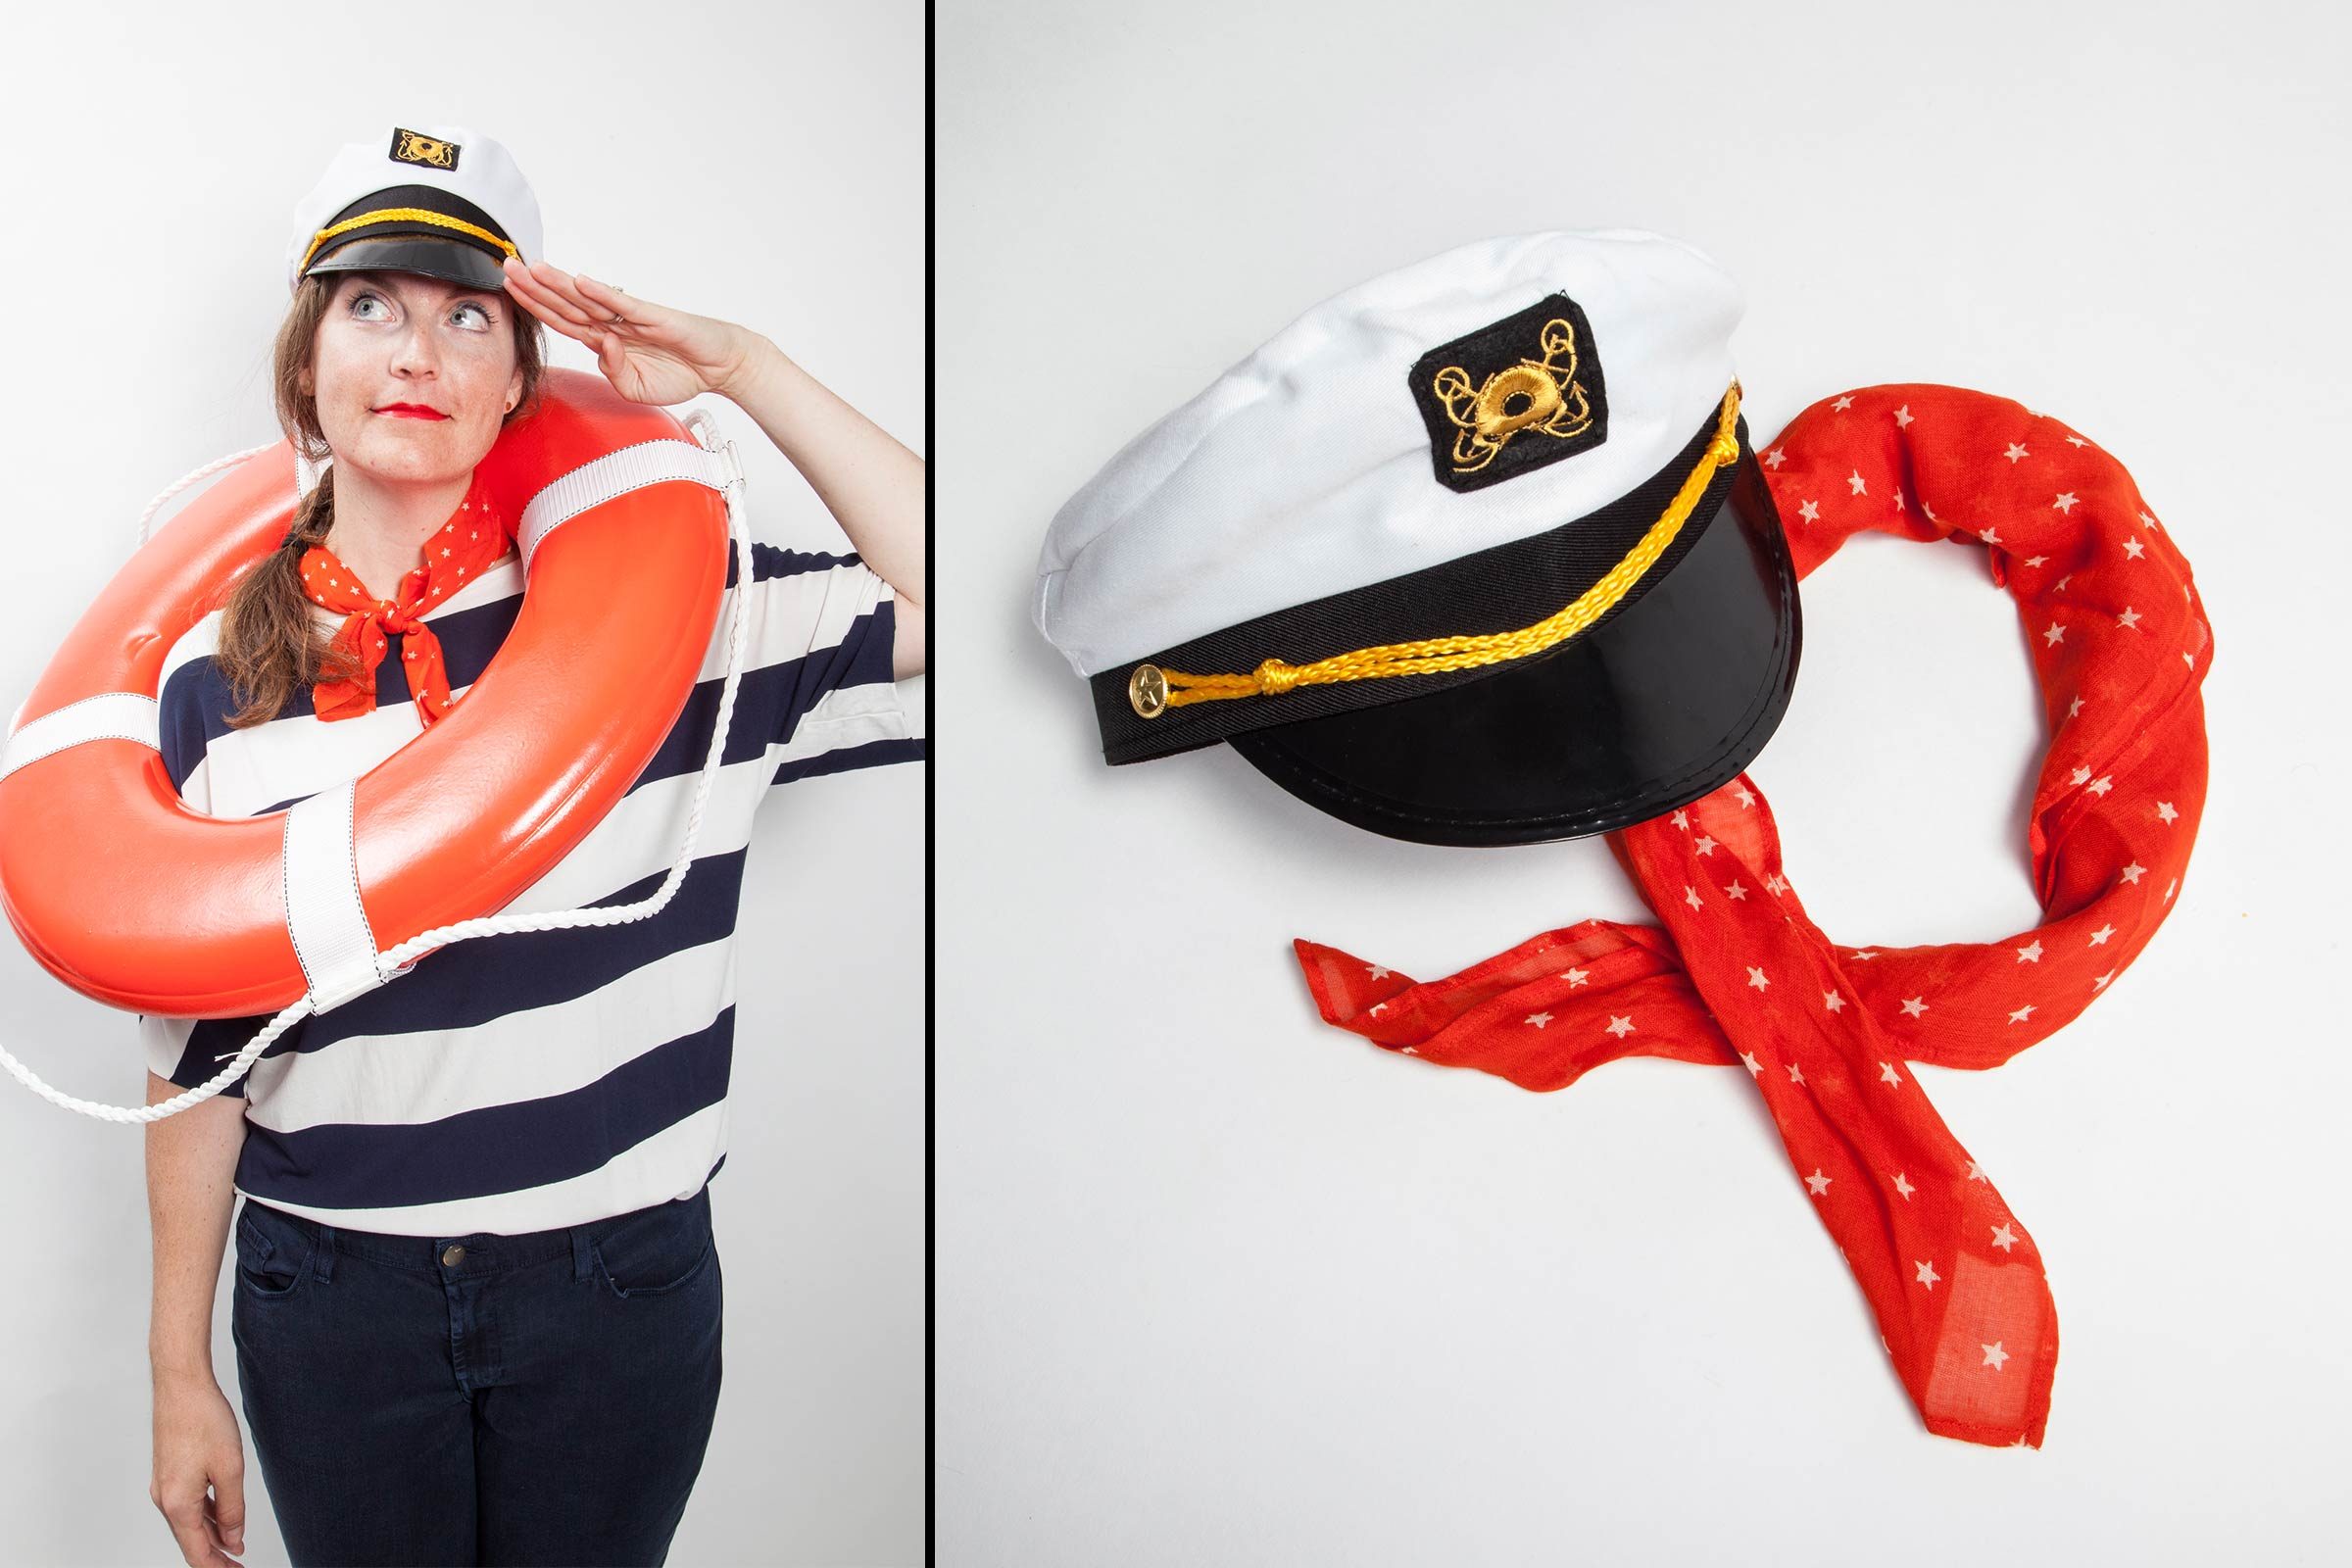 Mens Ahoy Sailor Costume, Sailor Halloween Costume